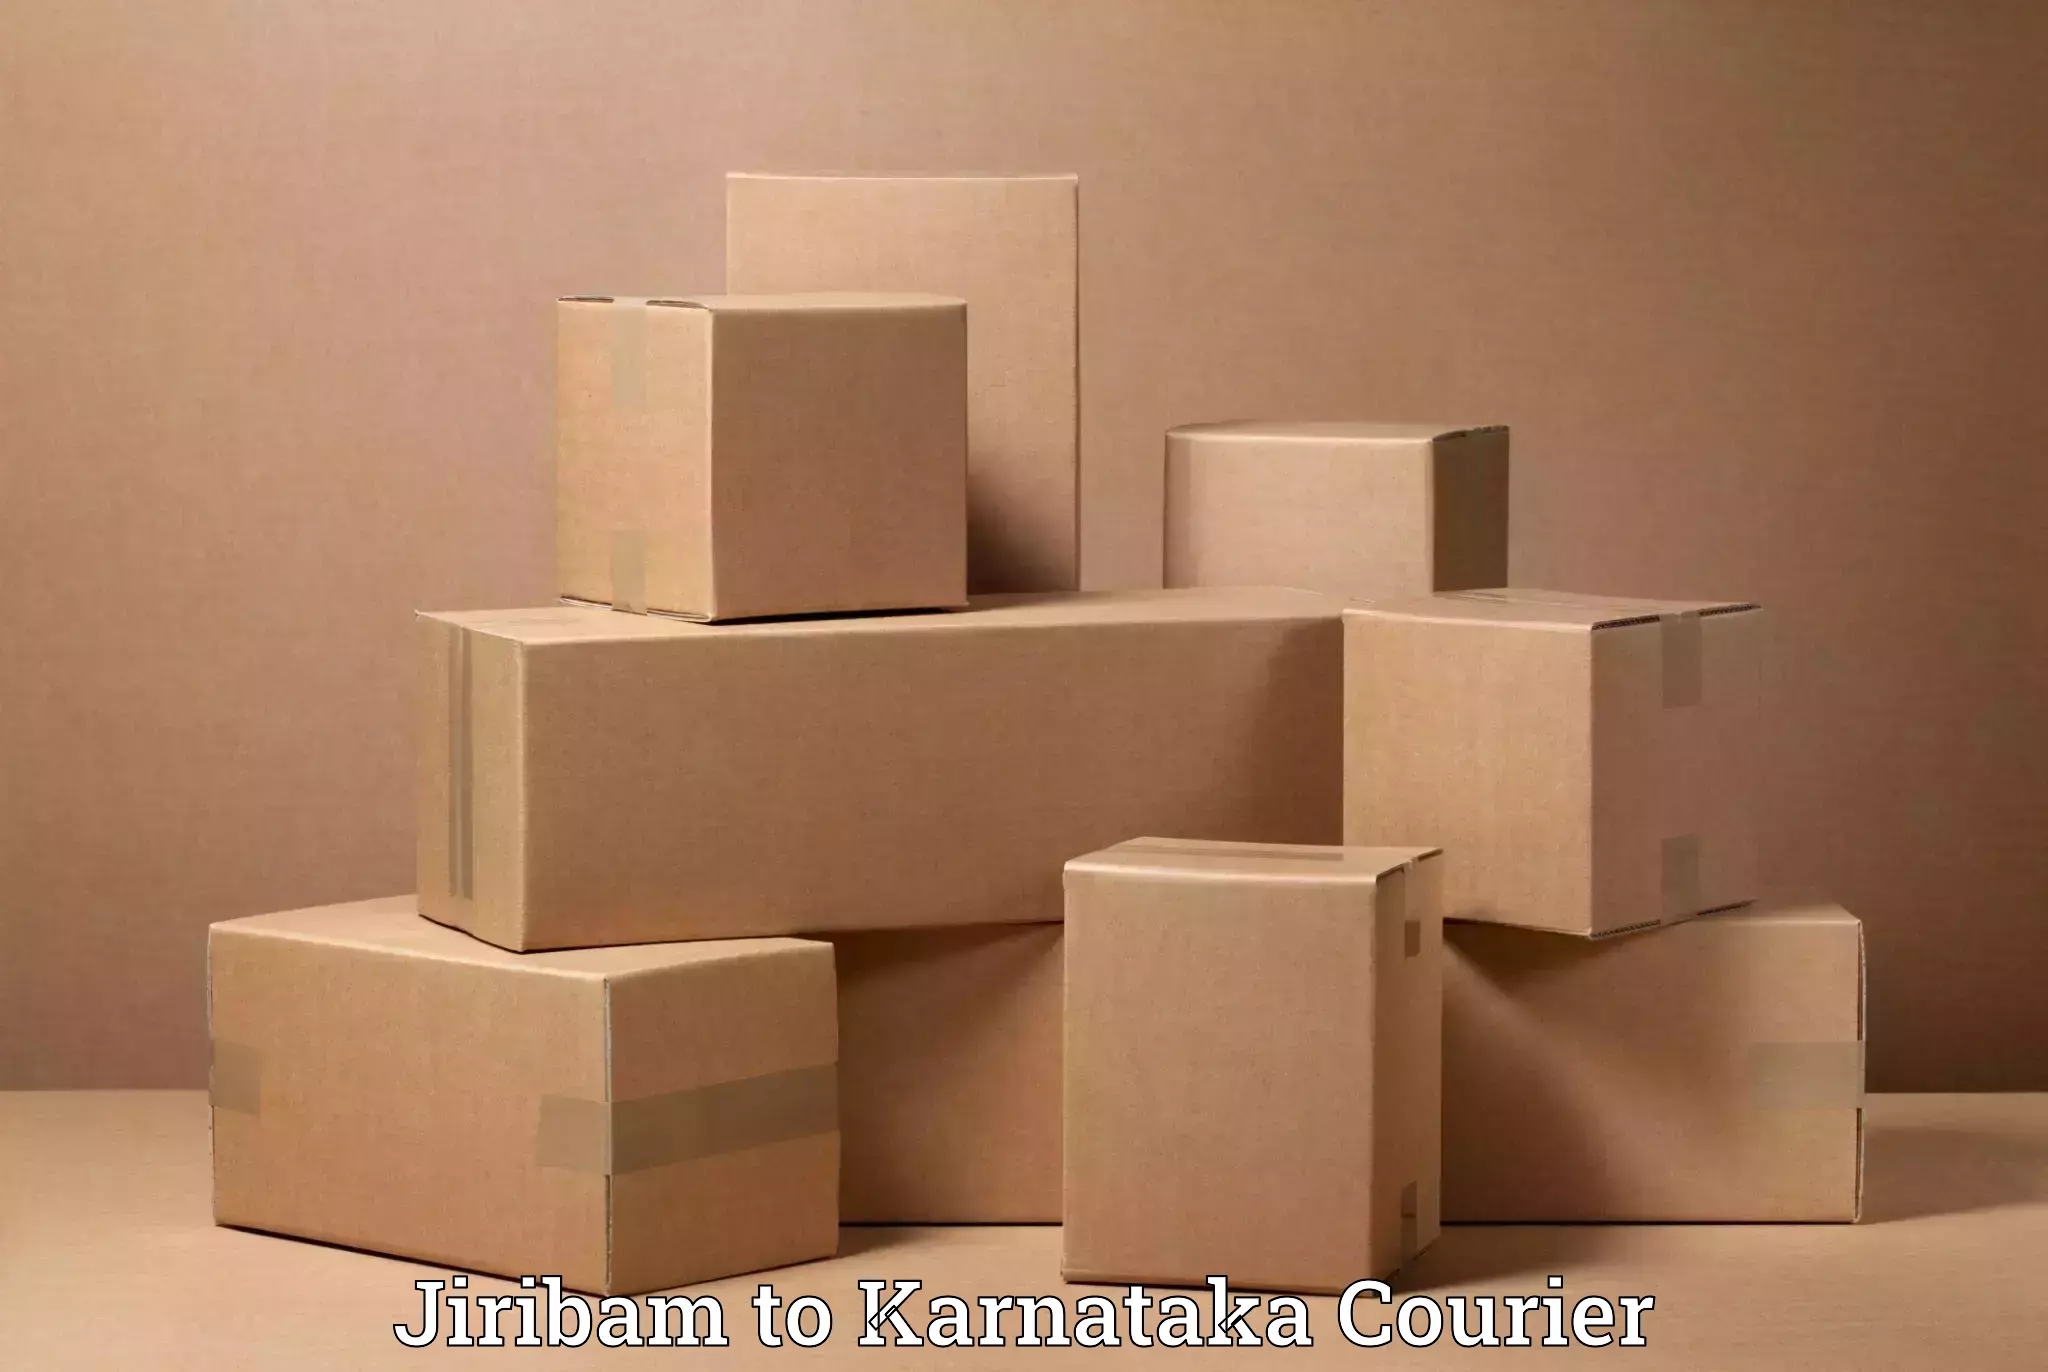 Moving and packing experts Jiribam to Harpanahalli